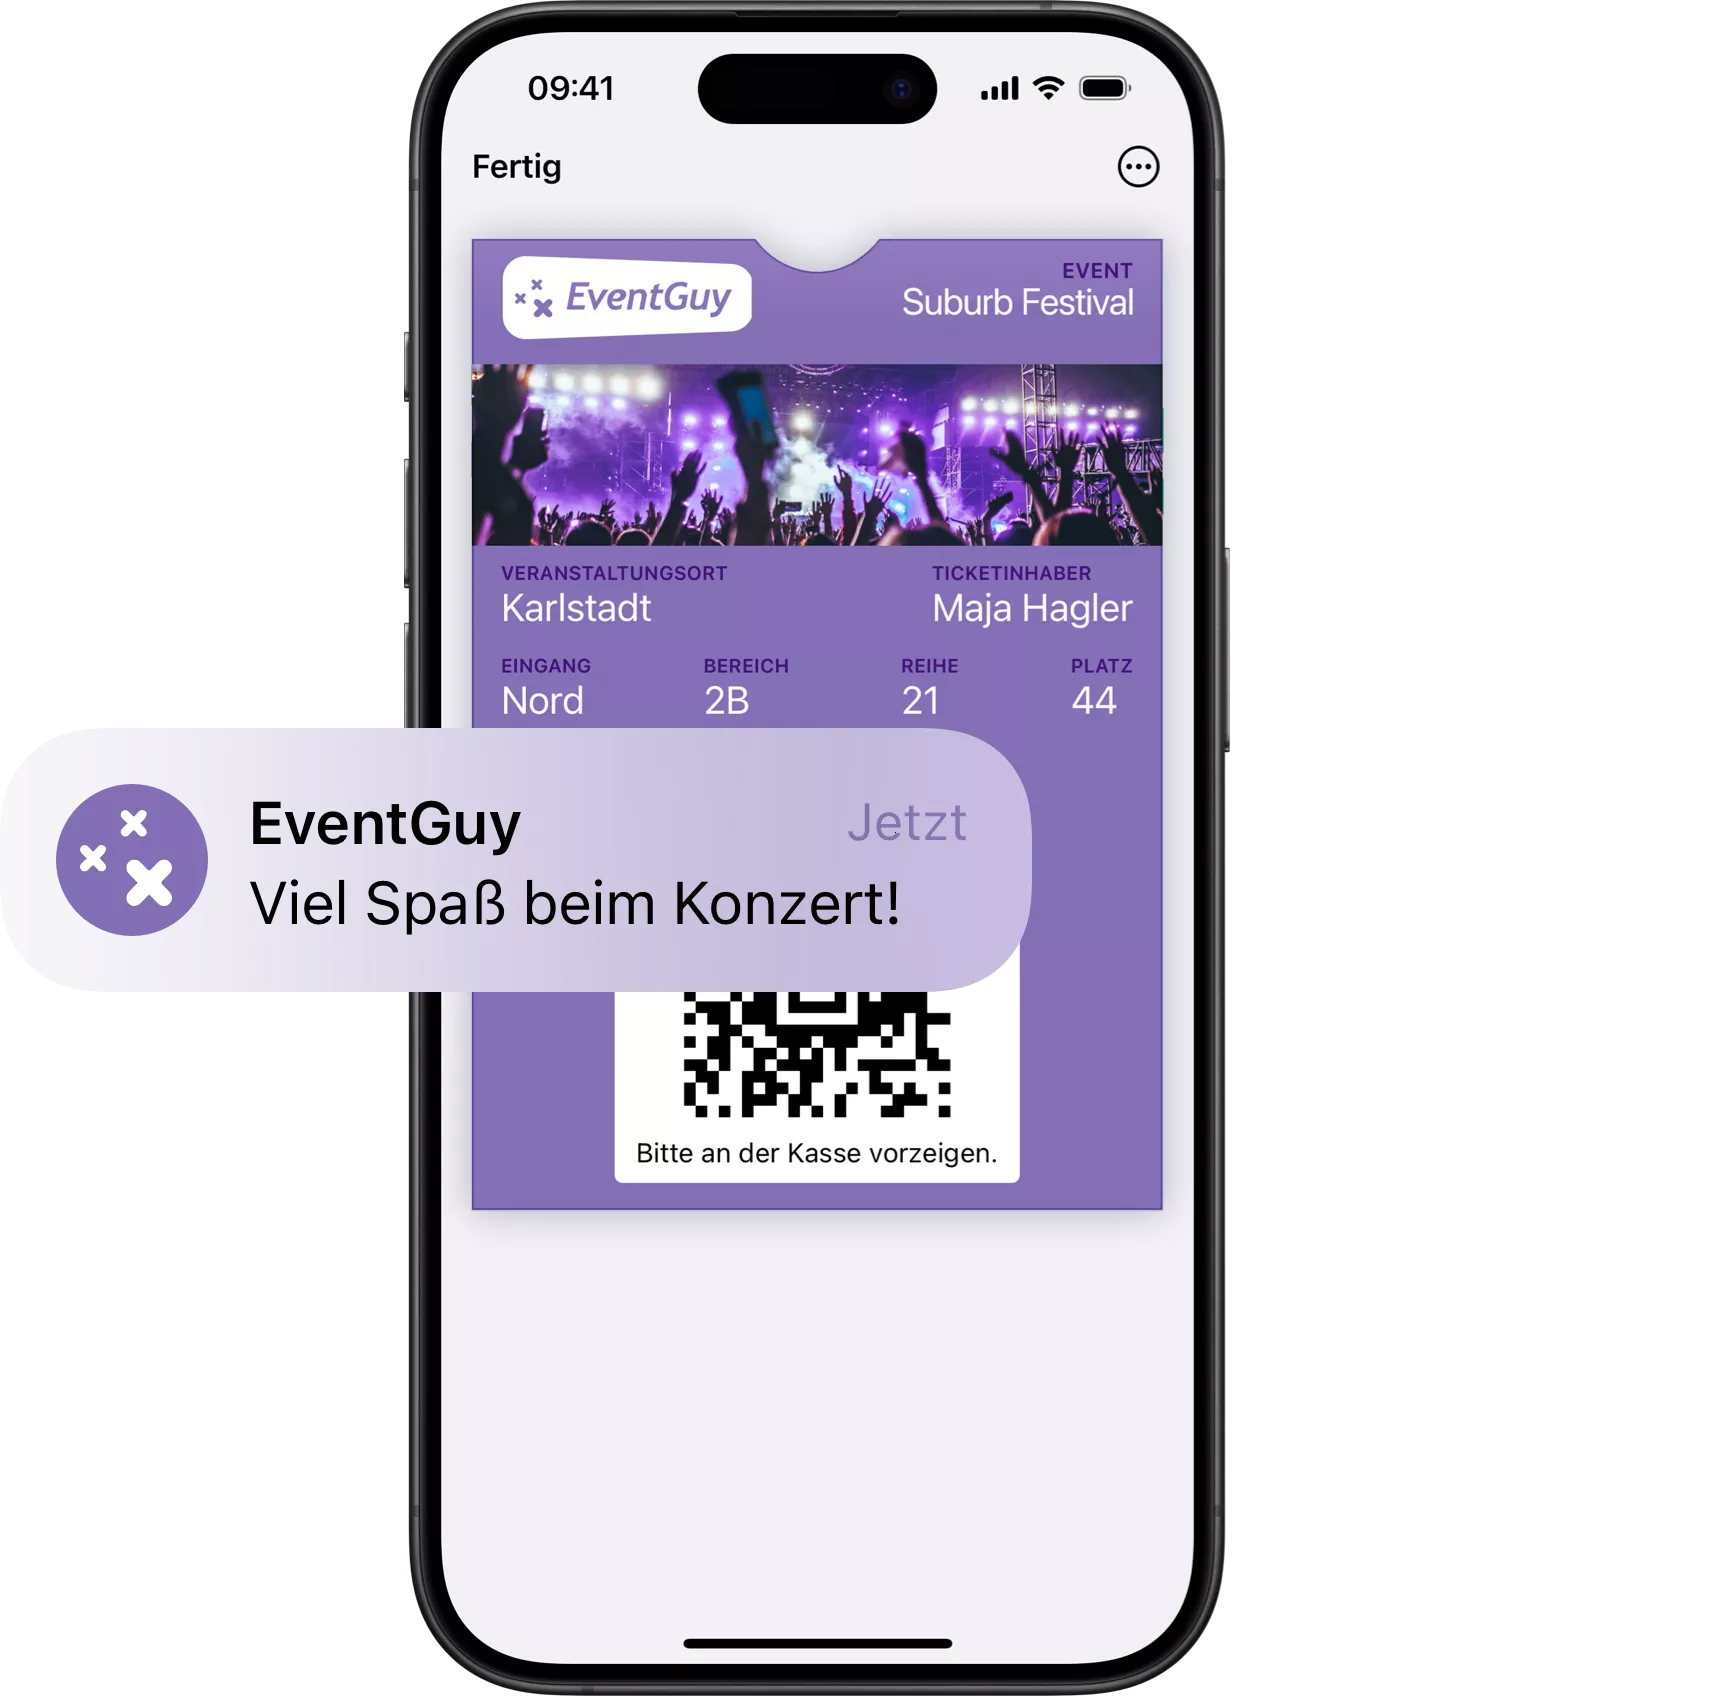 Event ticket example